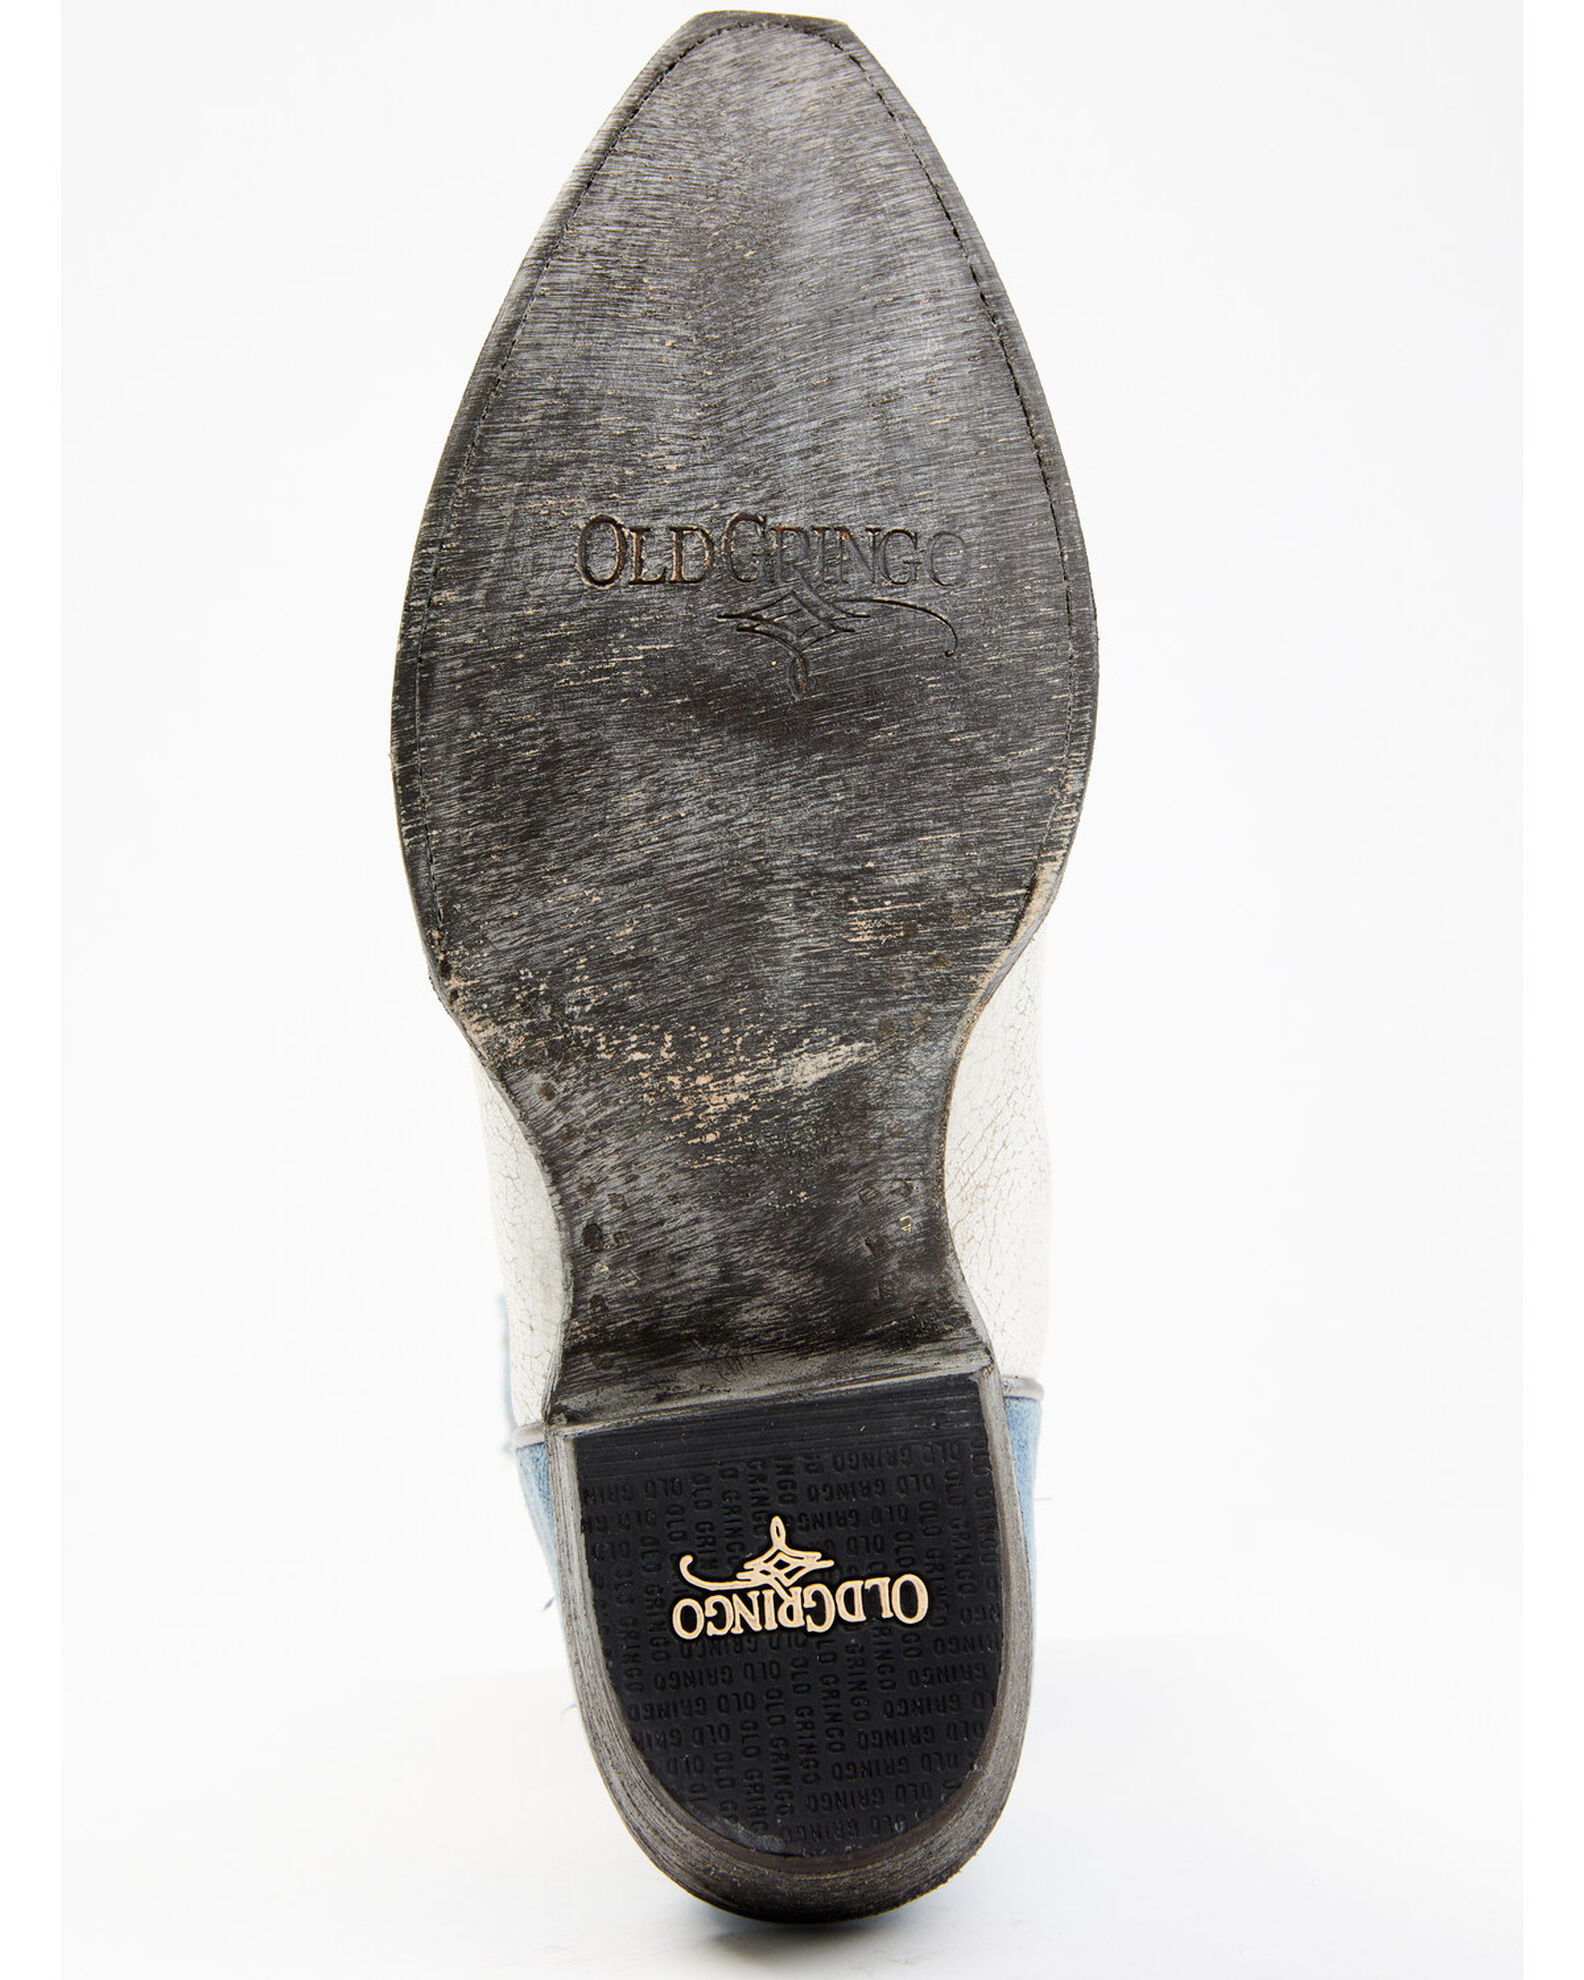 Old Gringo Women's Edith Western Boots - Snip Toe